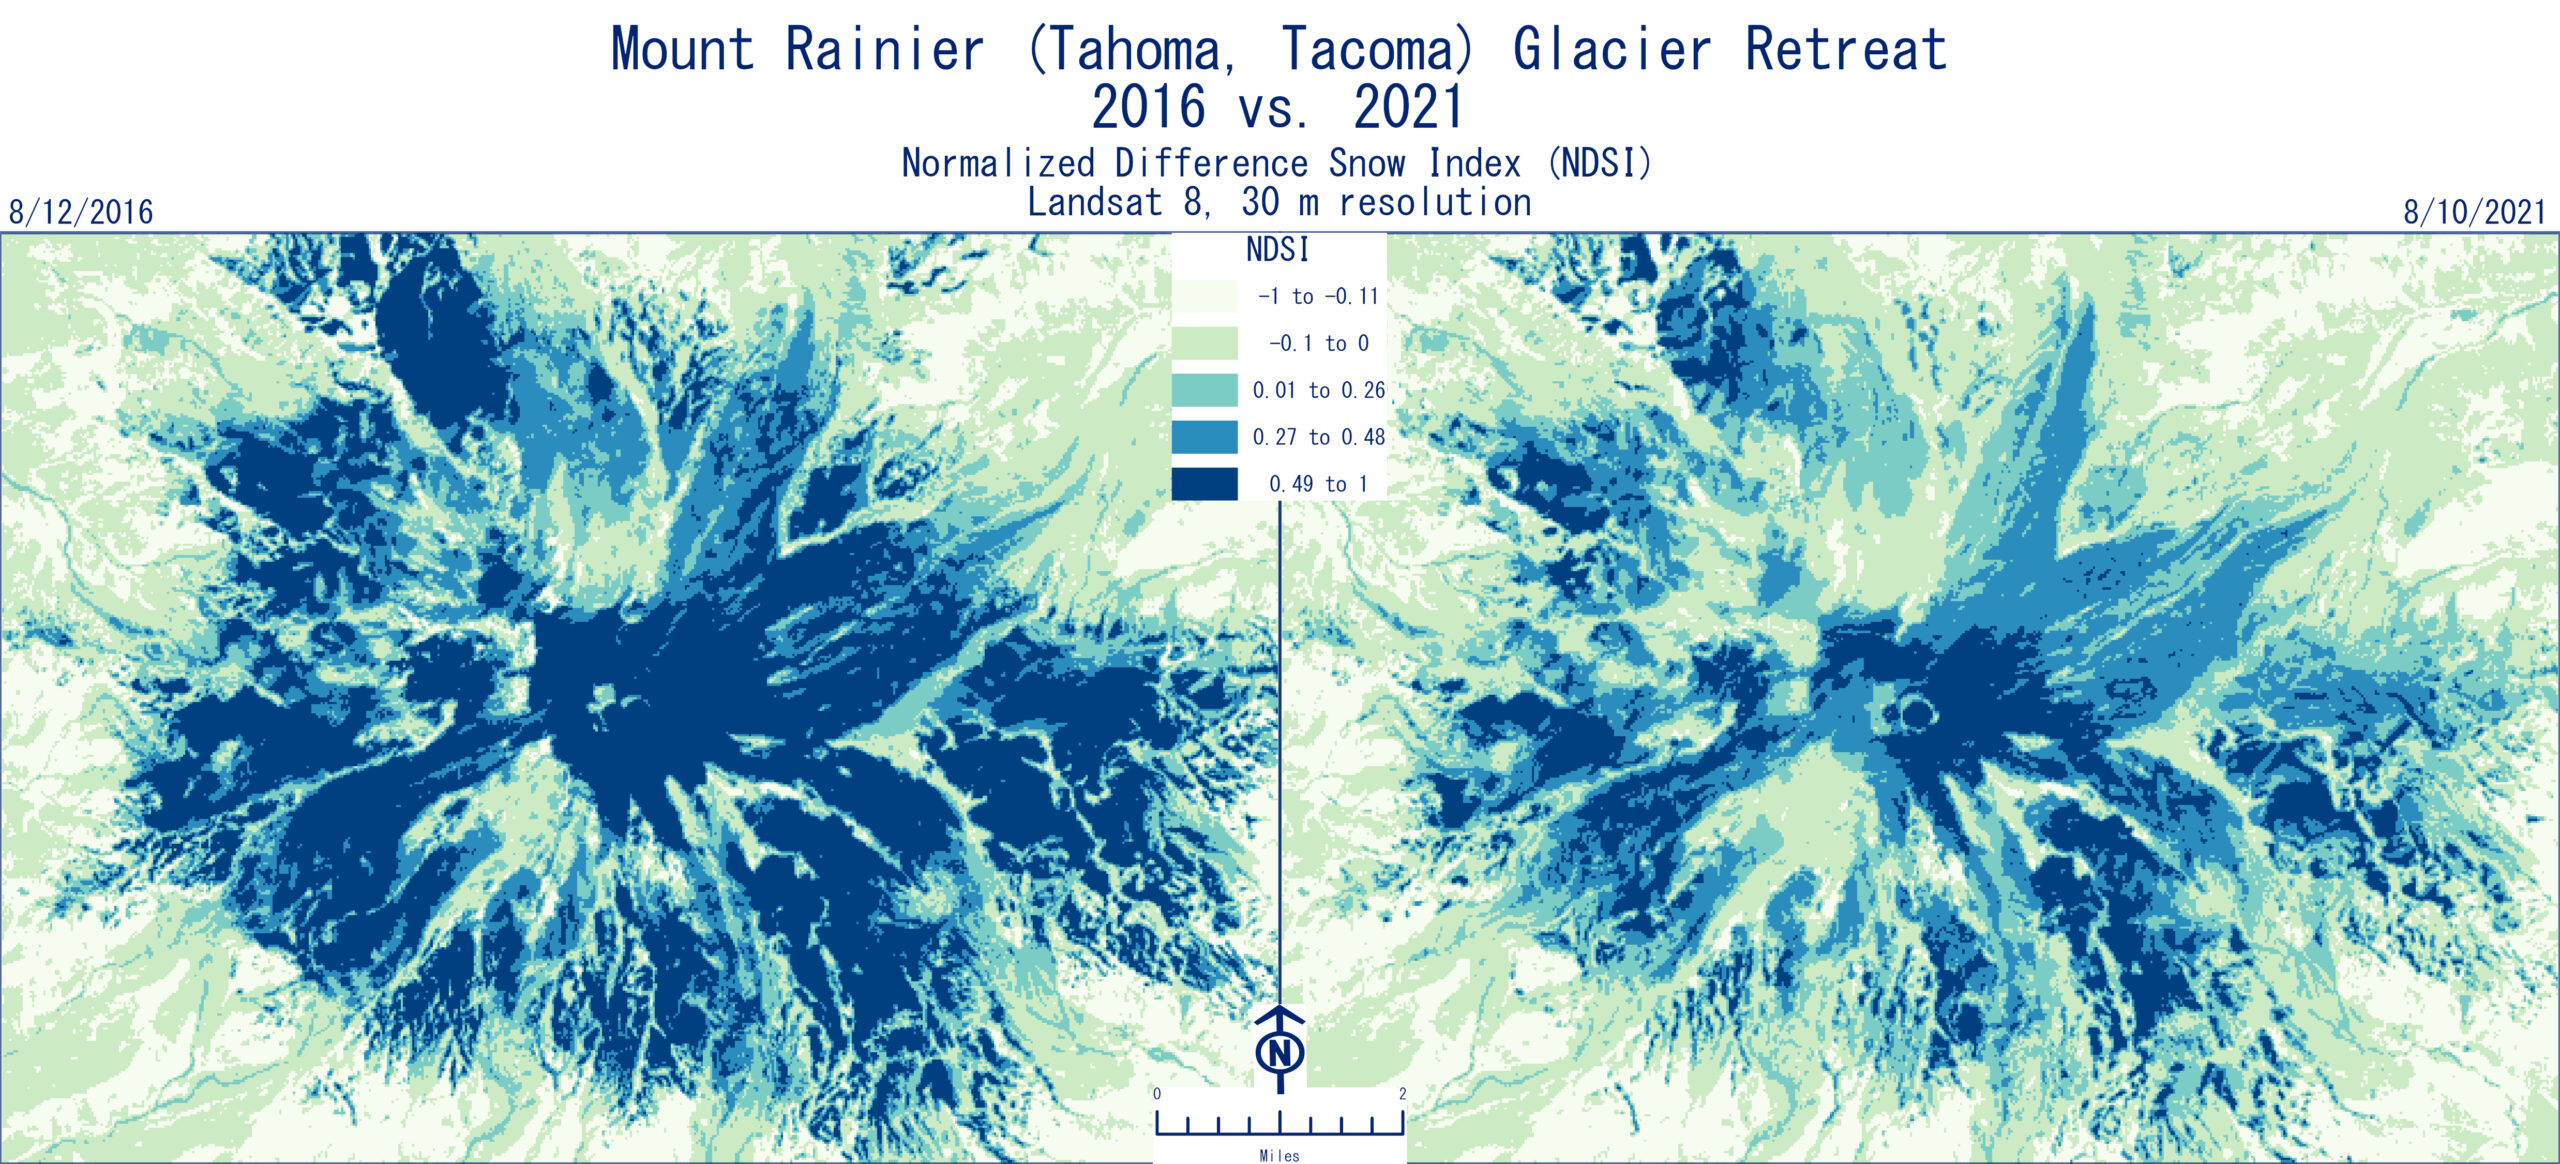 Mount Rainier (Tahoma, Tacoma) Glacier Retreat 2016 vs. 2021, Joe Tayabji